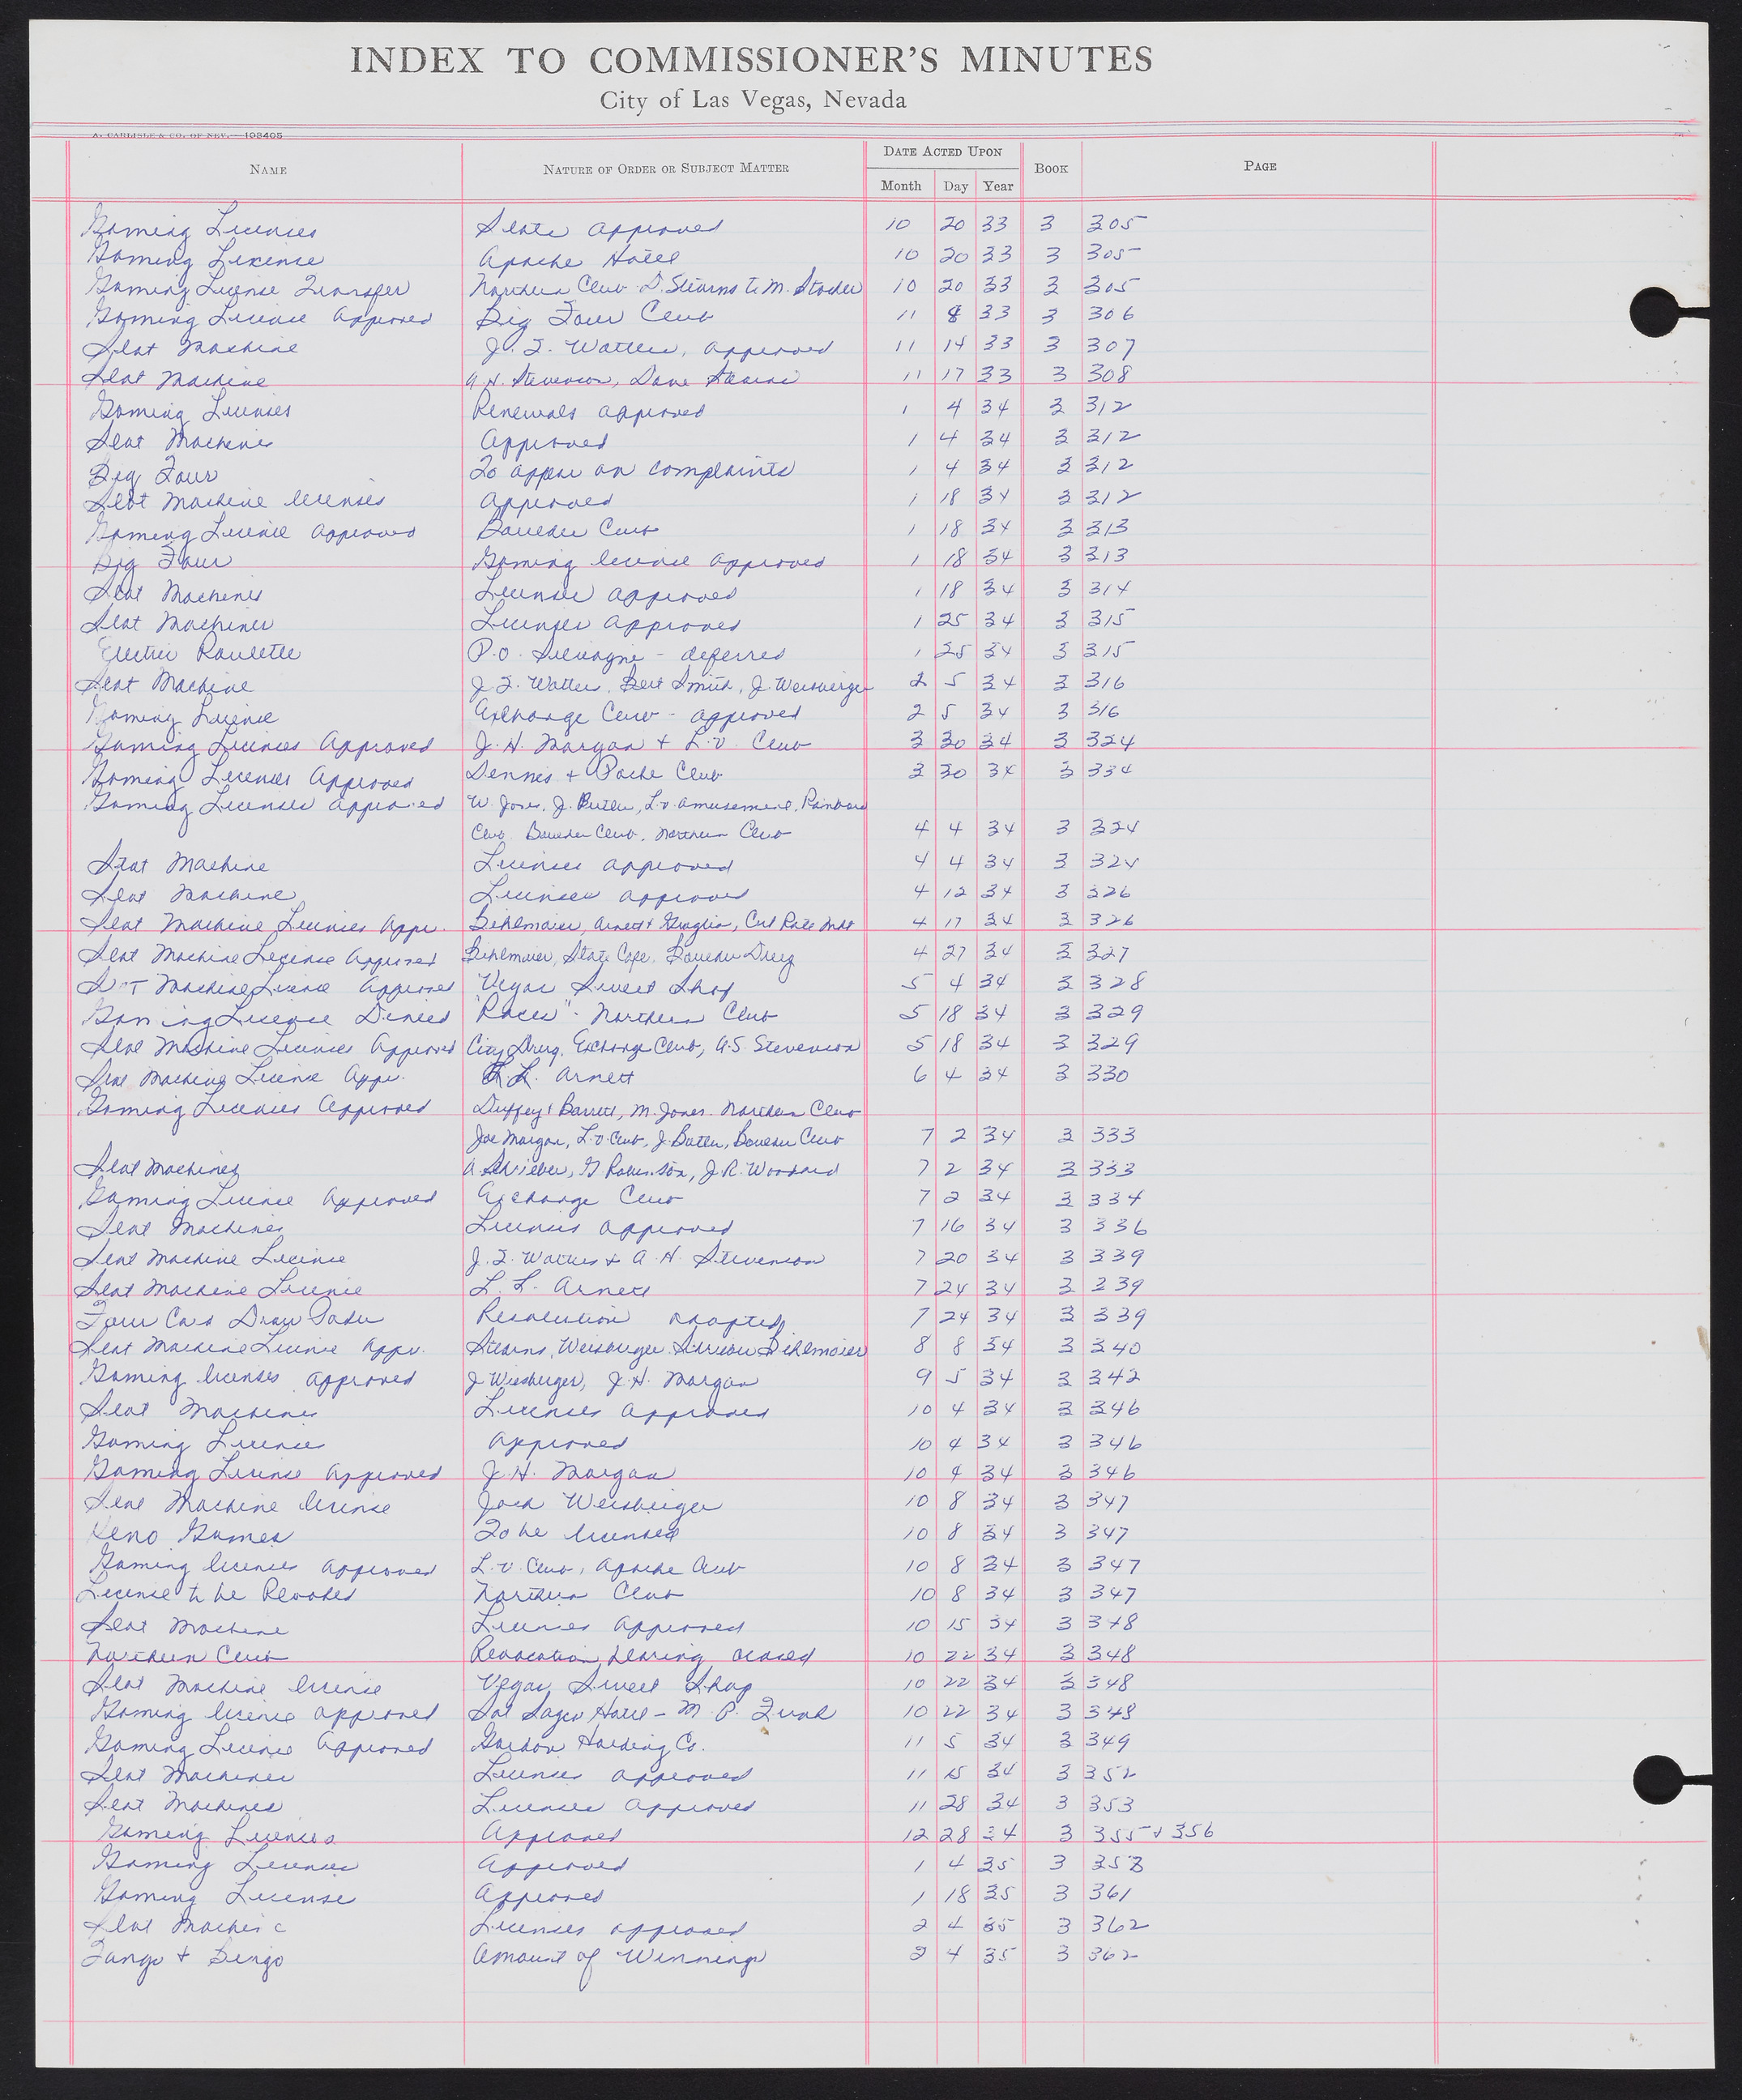 Las Vegas City Commission Minutes Index 1, 1911-1960: documents, item 155